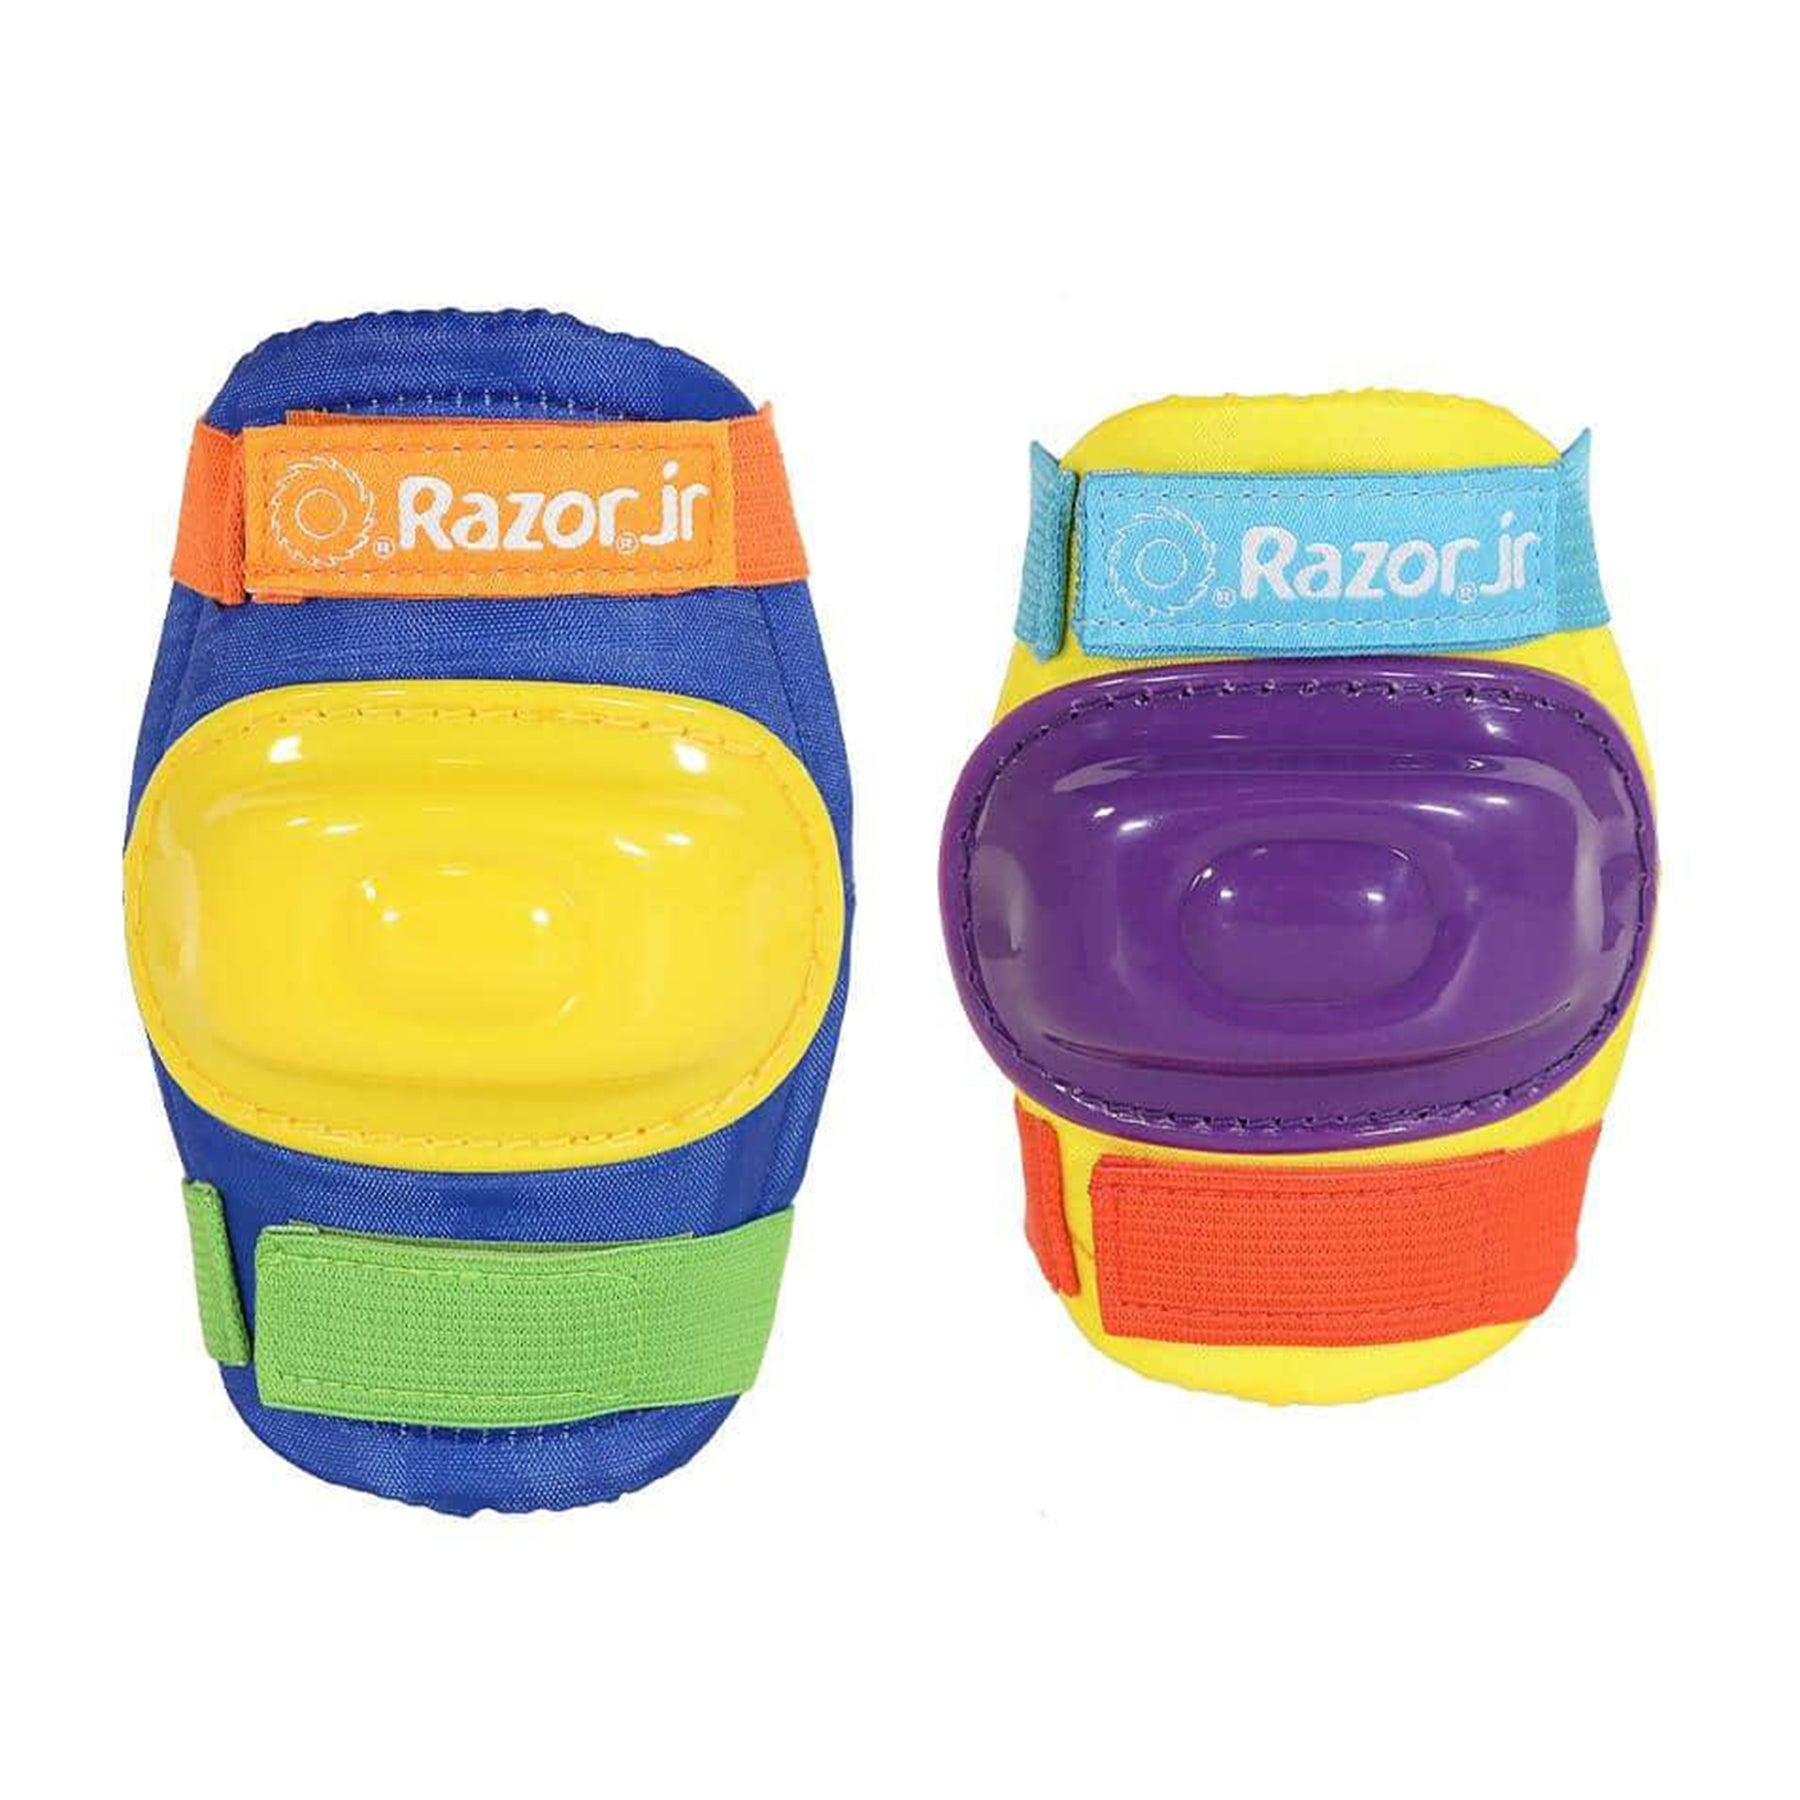 Razor® Jr Toddler Multi-Sport Pad Set | Pad Set for Kids Ages 1-3